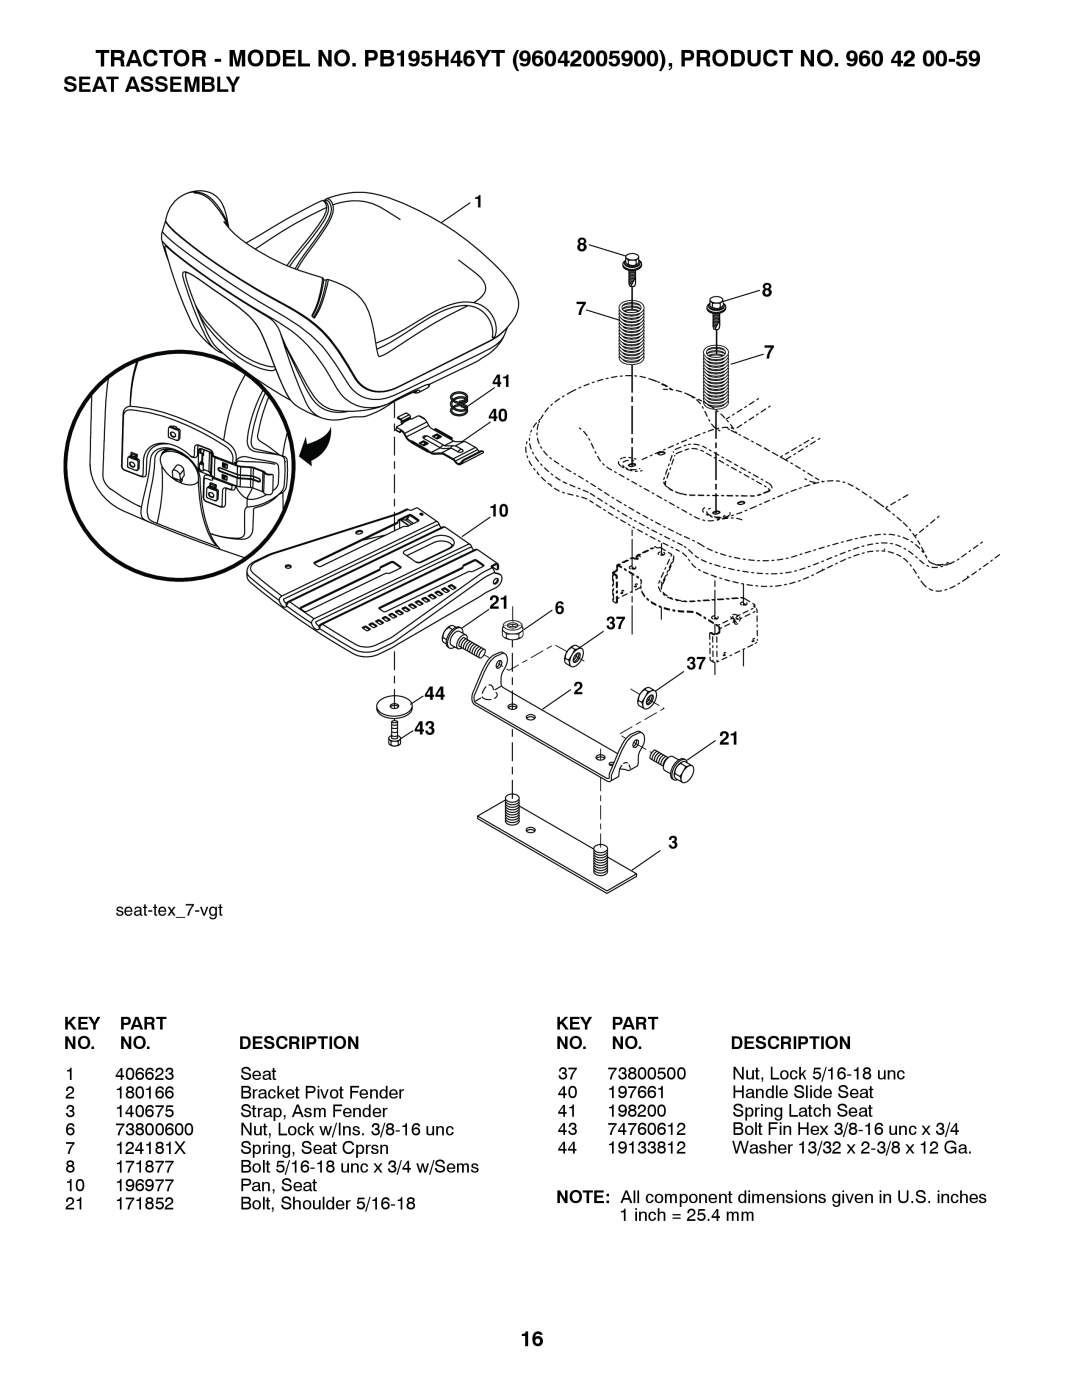 Poulan manual Seat Assembly, TRACTOR - MODEL NO. PB195H46YT 96042005900, PRODUCT NO. 960 42, Part, Description 